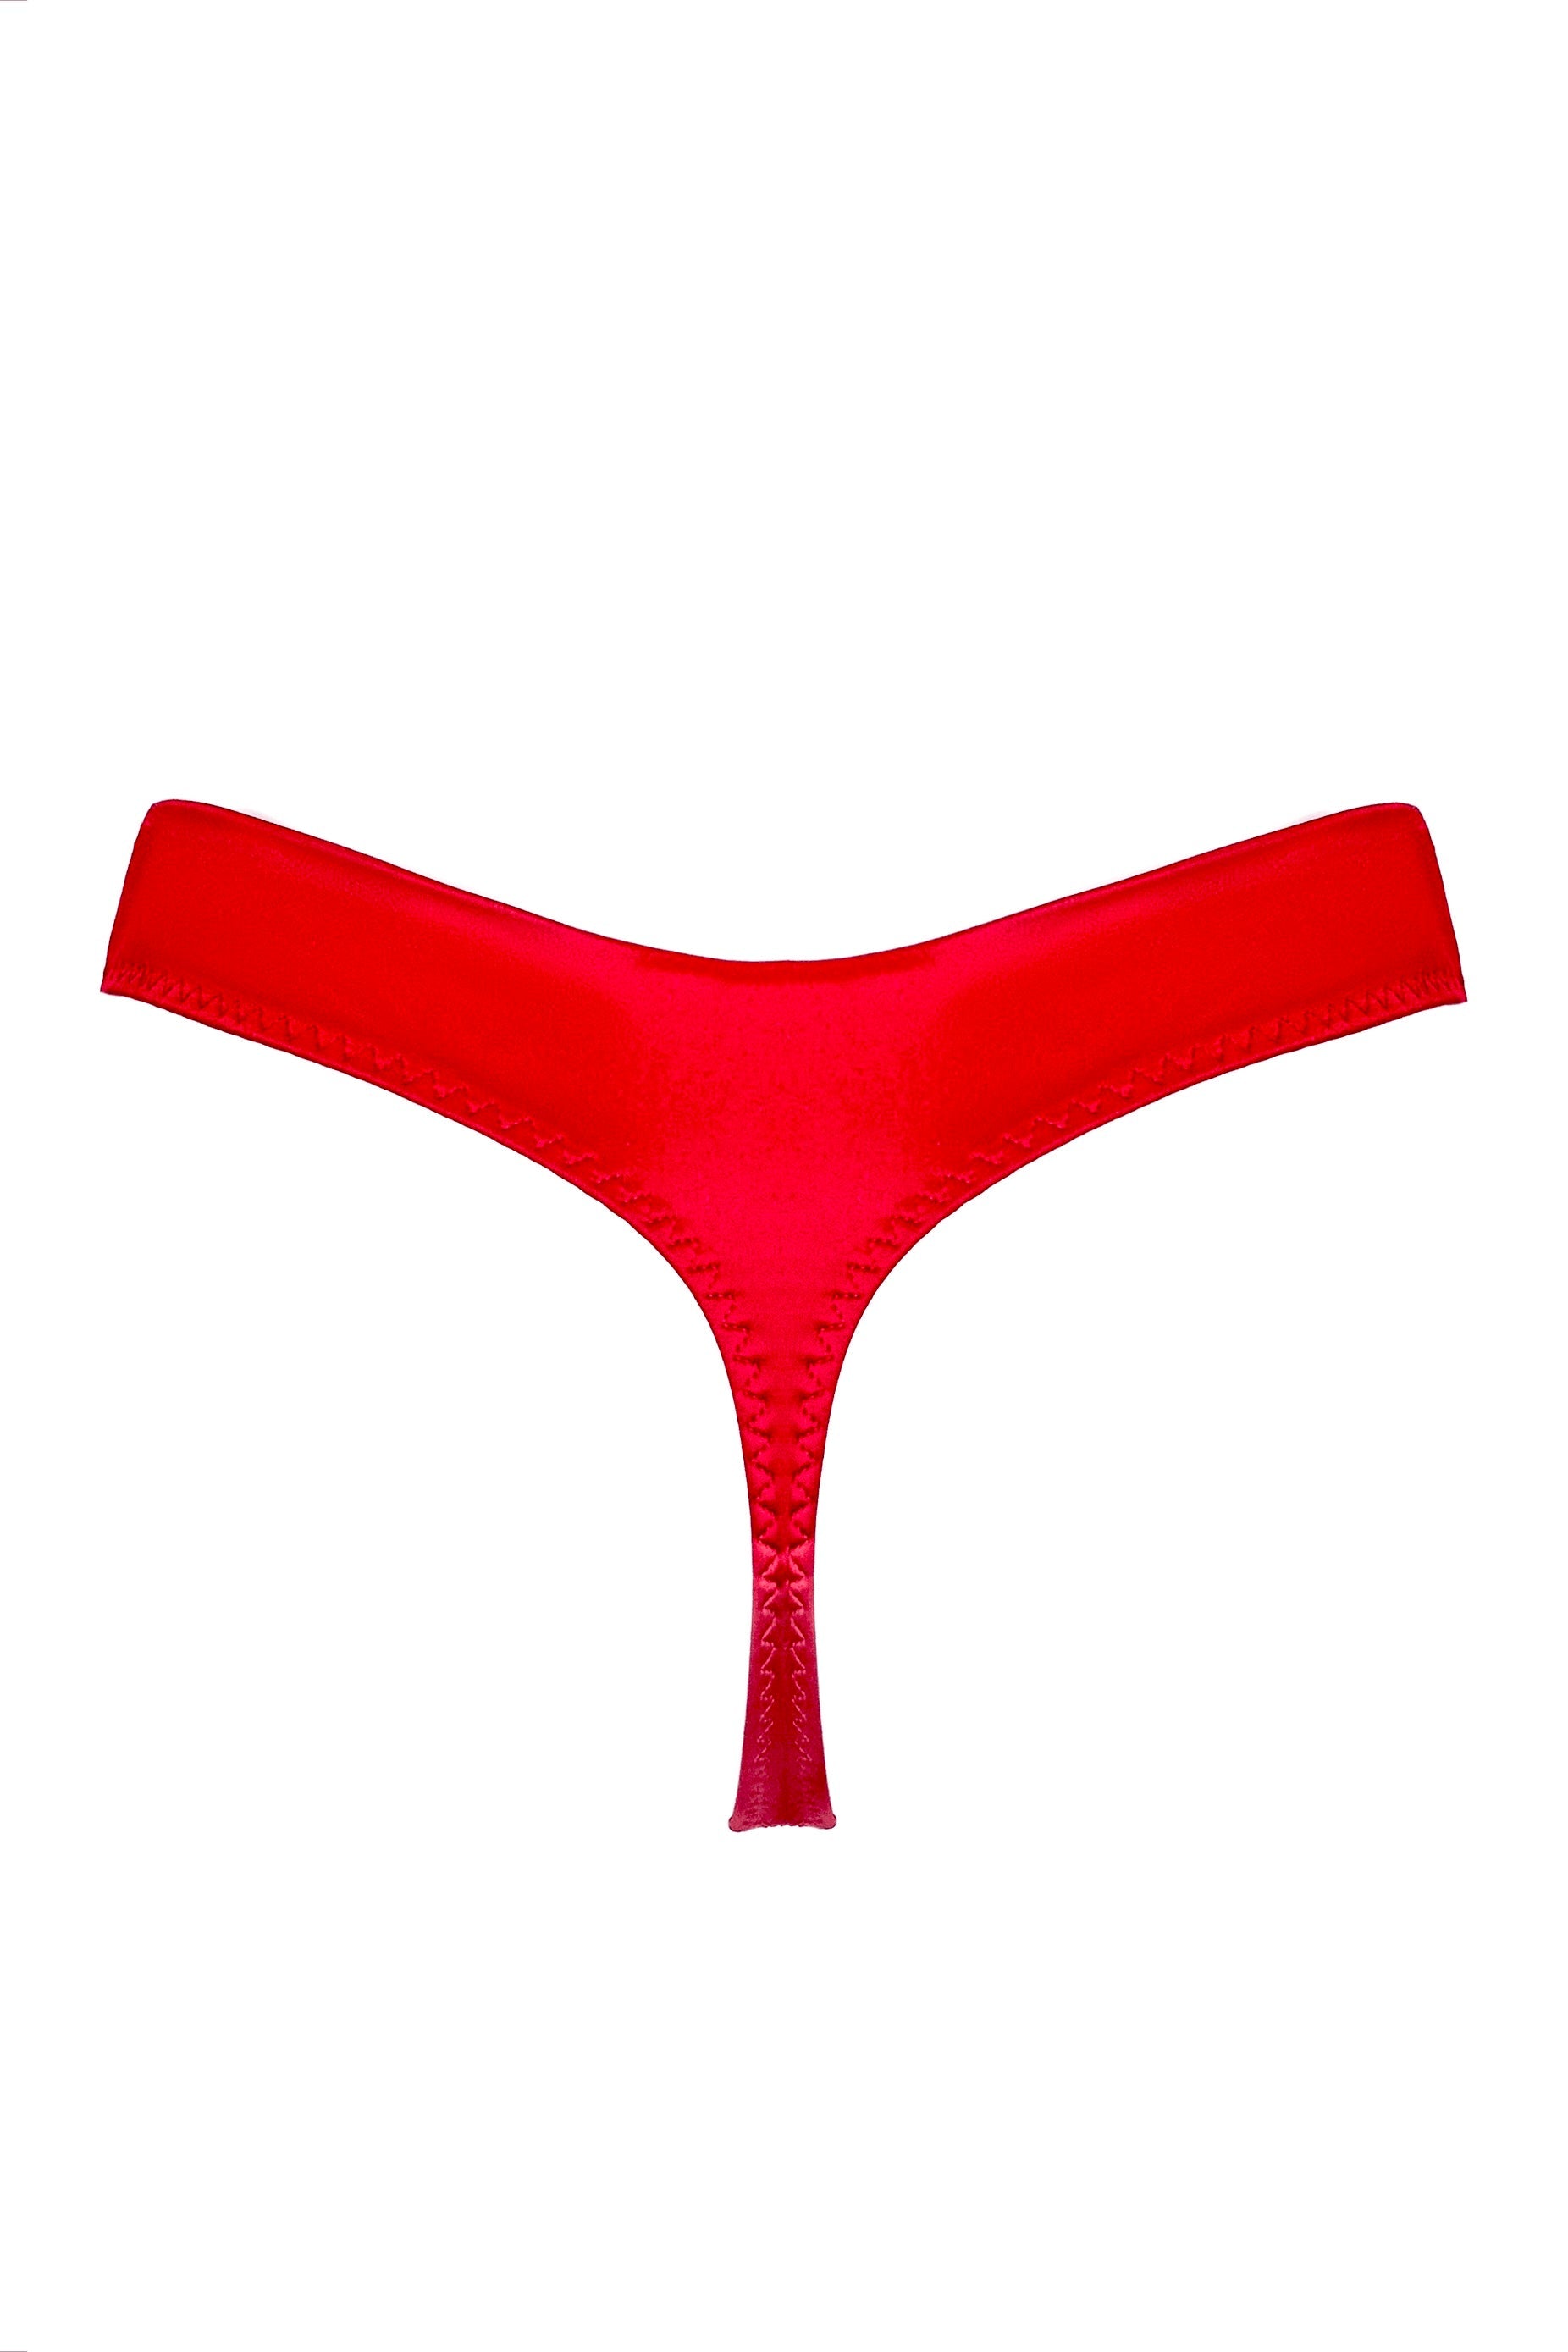 Cymothoe red thongs